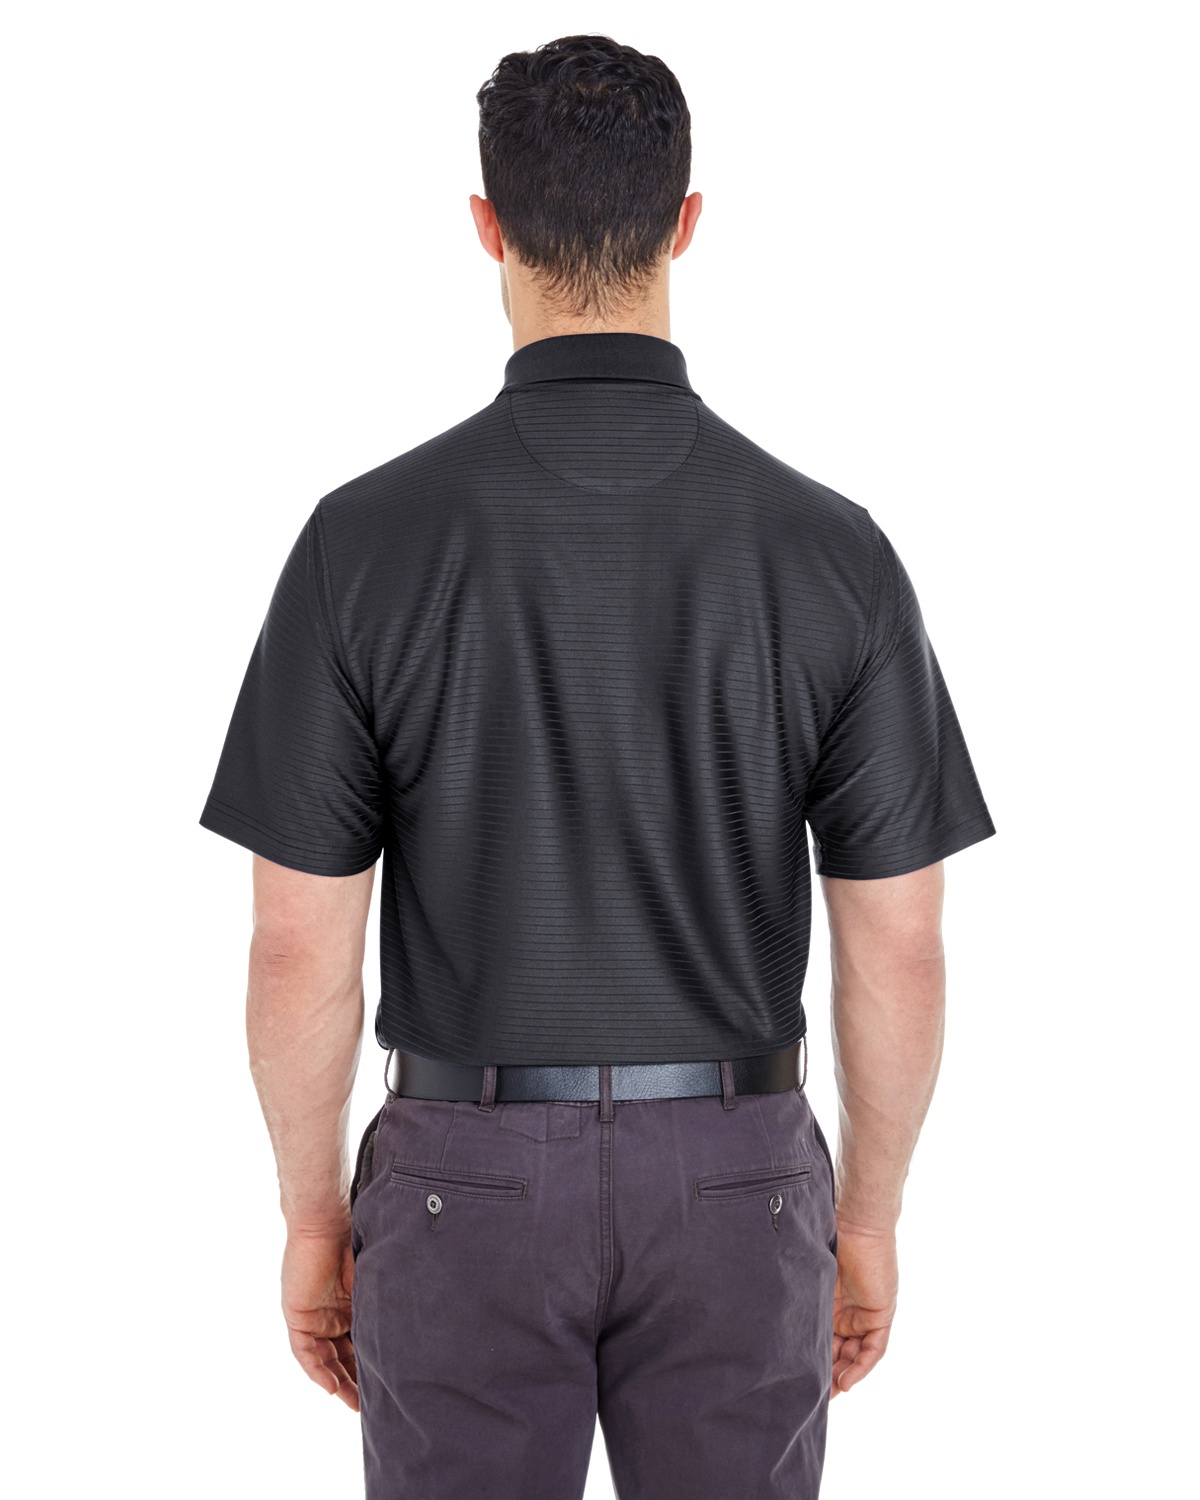 'UltraClub 8413 Men's Cool & Dry Elite Tonal Stripe Performance Polo Shirt'